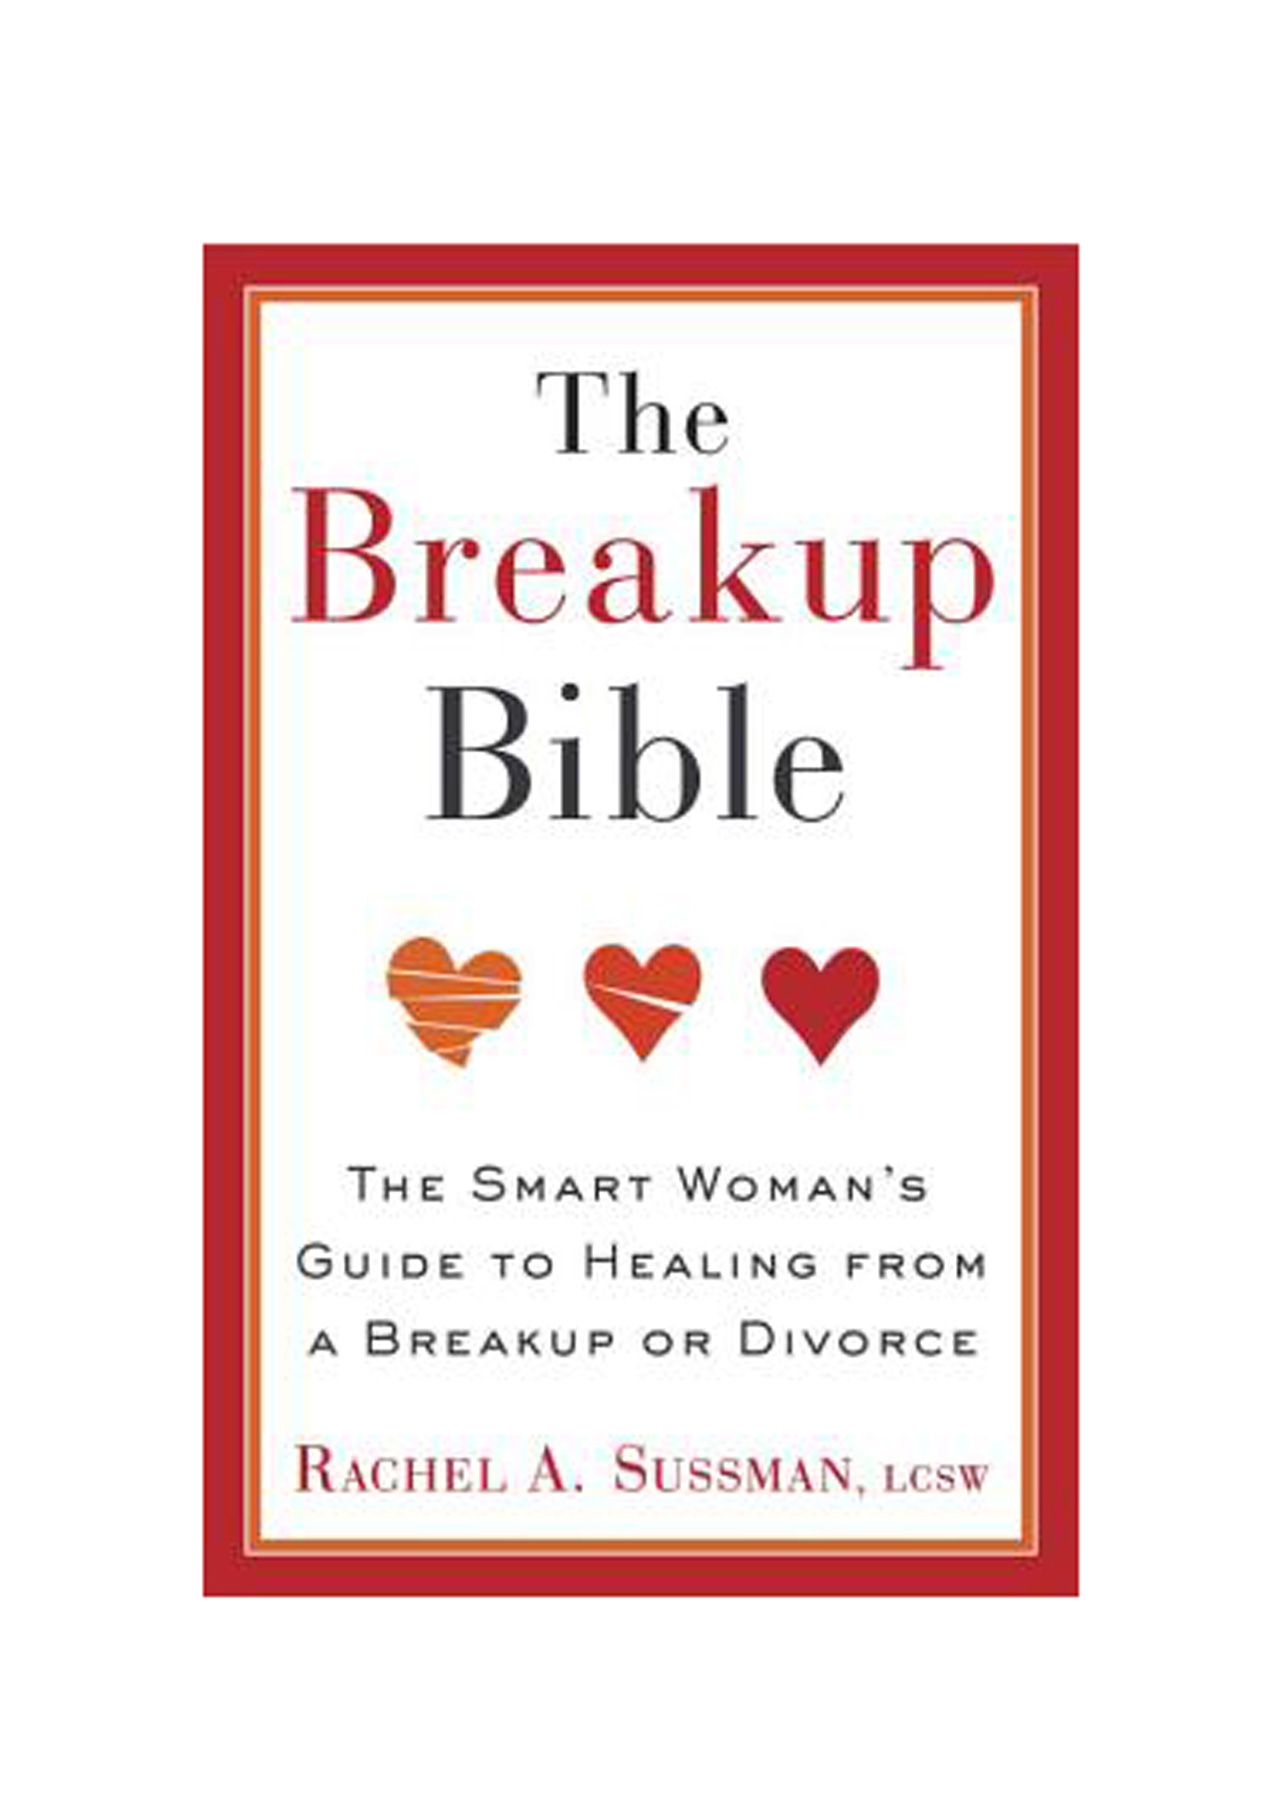 Livres pour les ruptures : The Breakup Bible : The Smart Woman’s Guide to Healing from a Breakup or Divorce, par Rachel Sussman